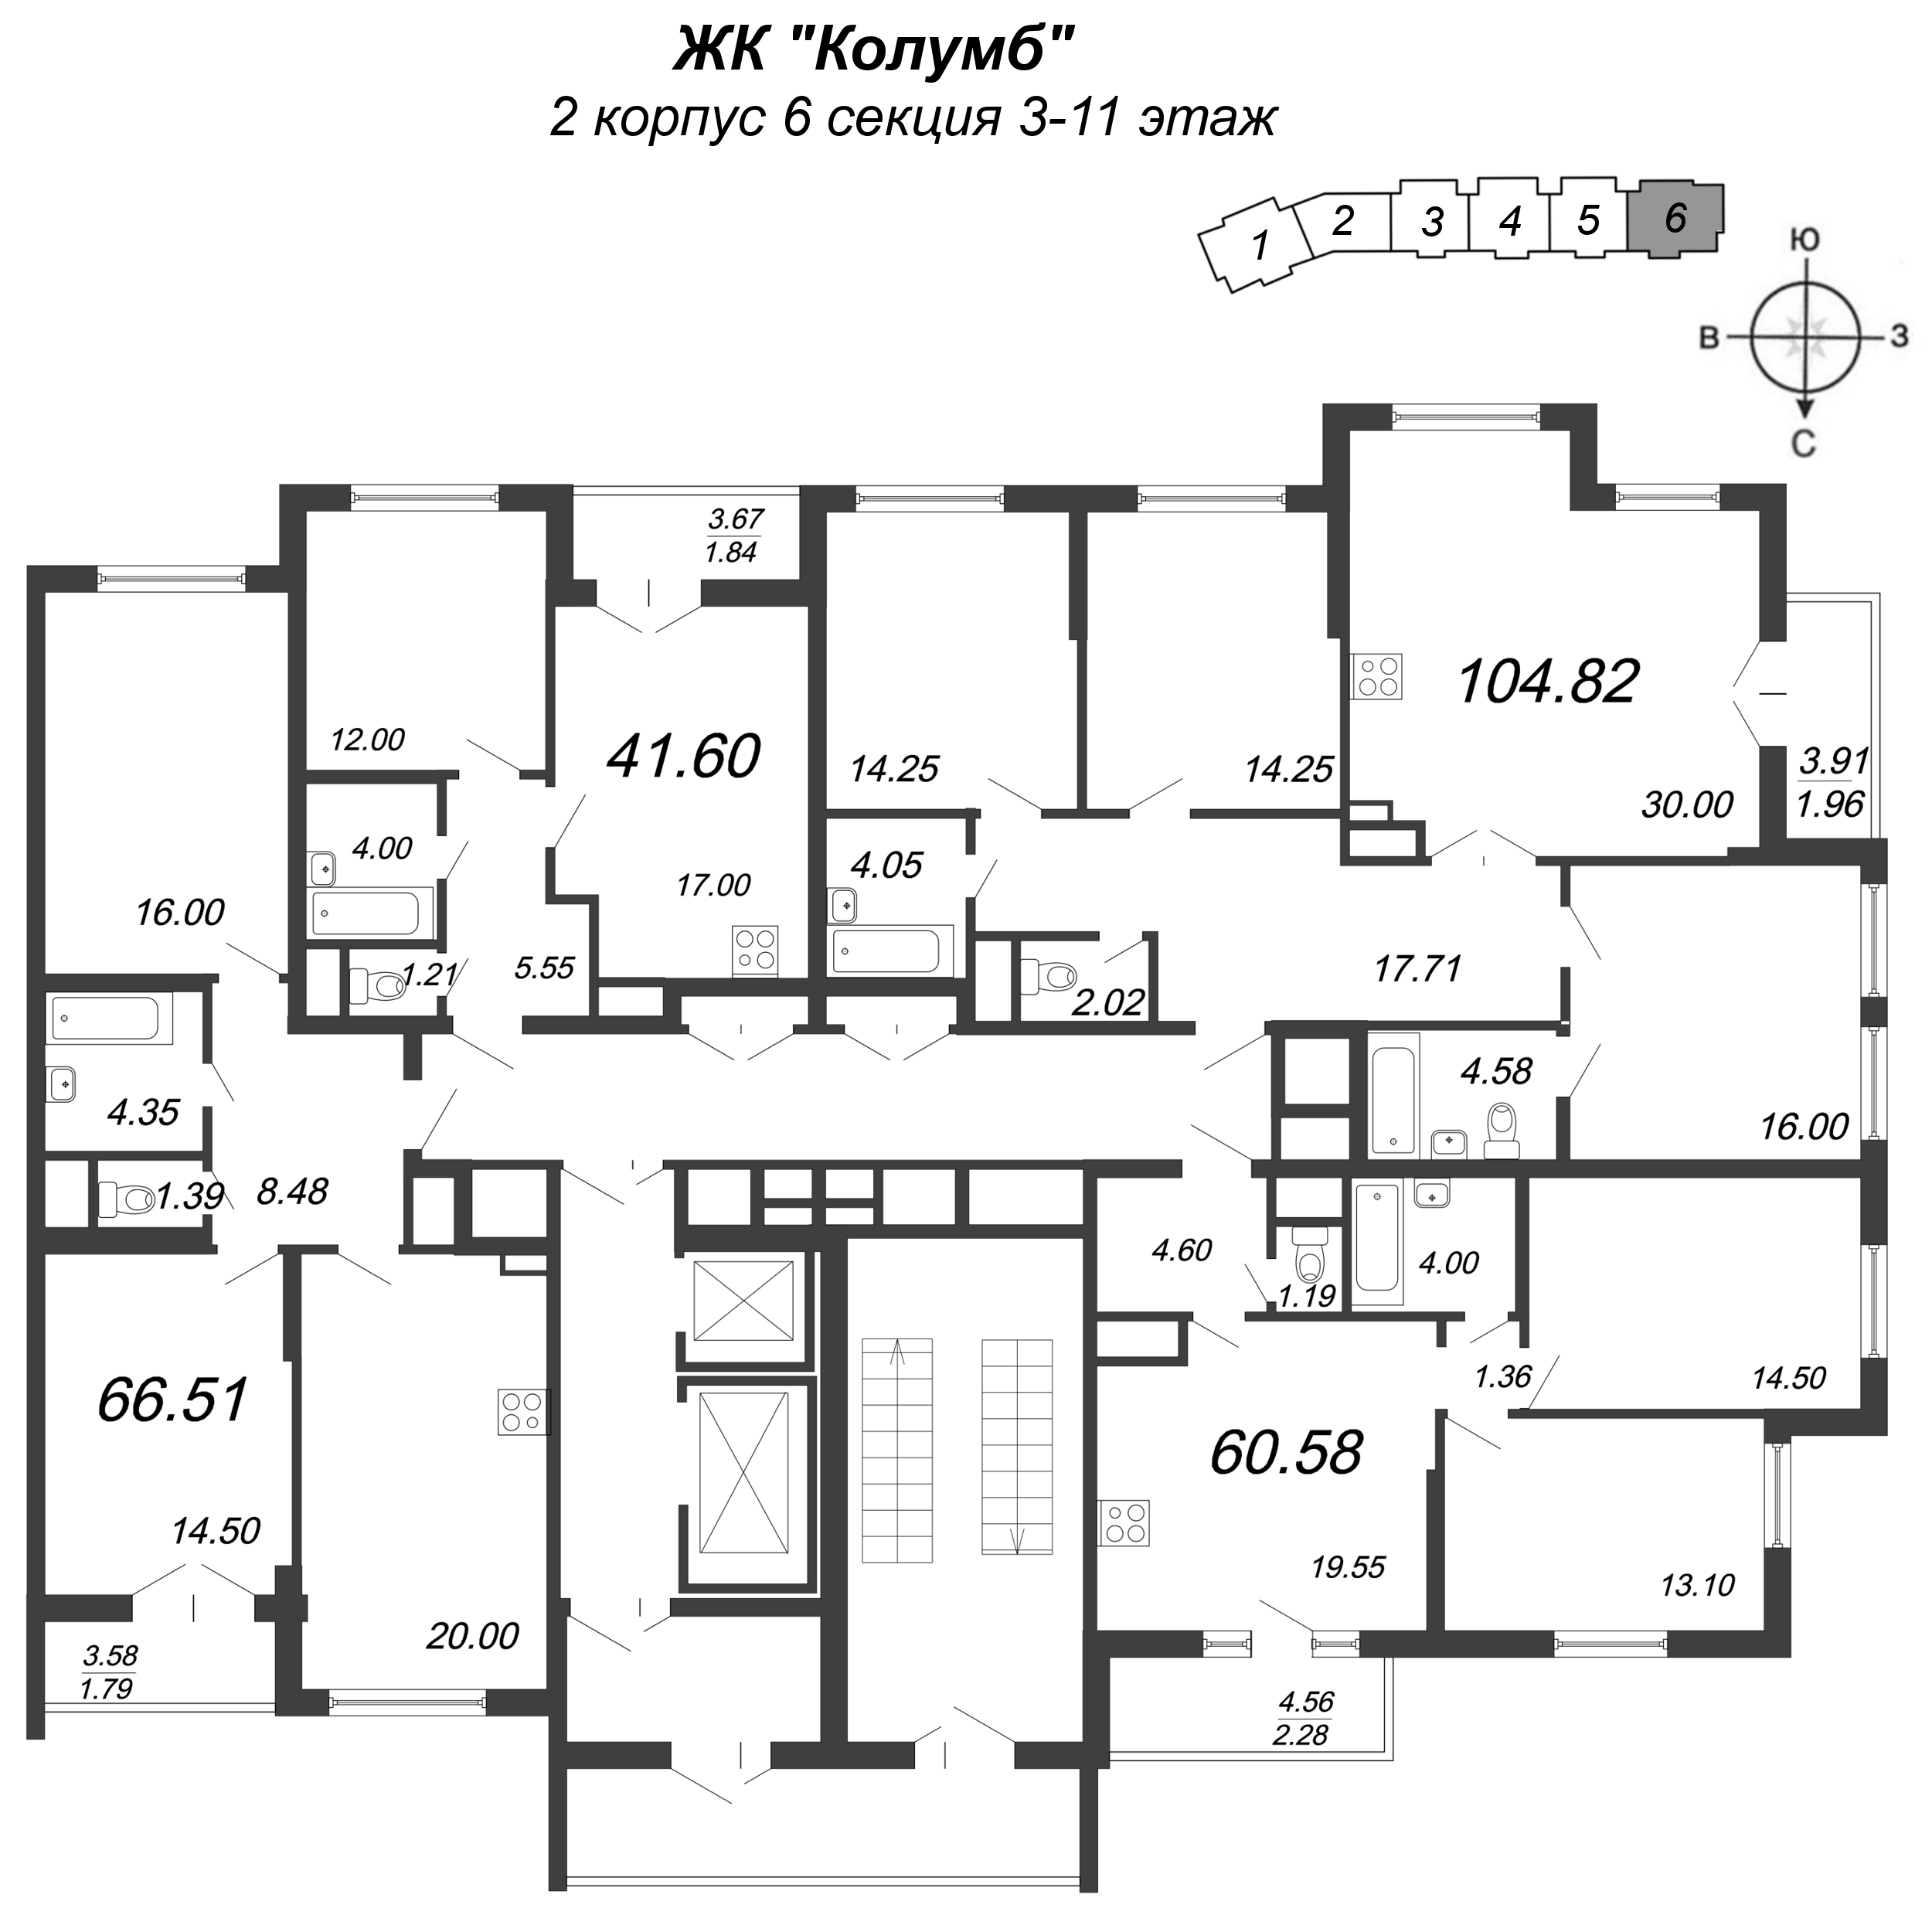 4-комнатная (Евро) квартира, 105.3 м² - планировка этажа